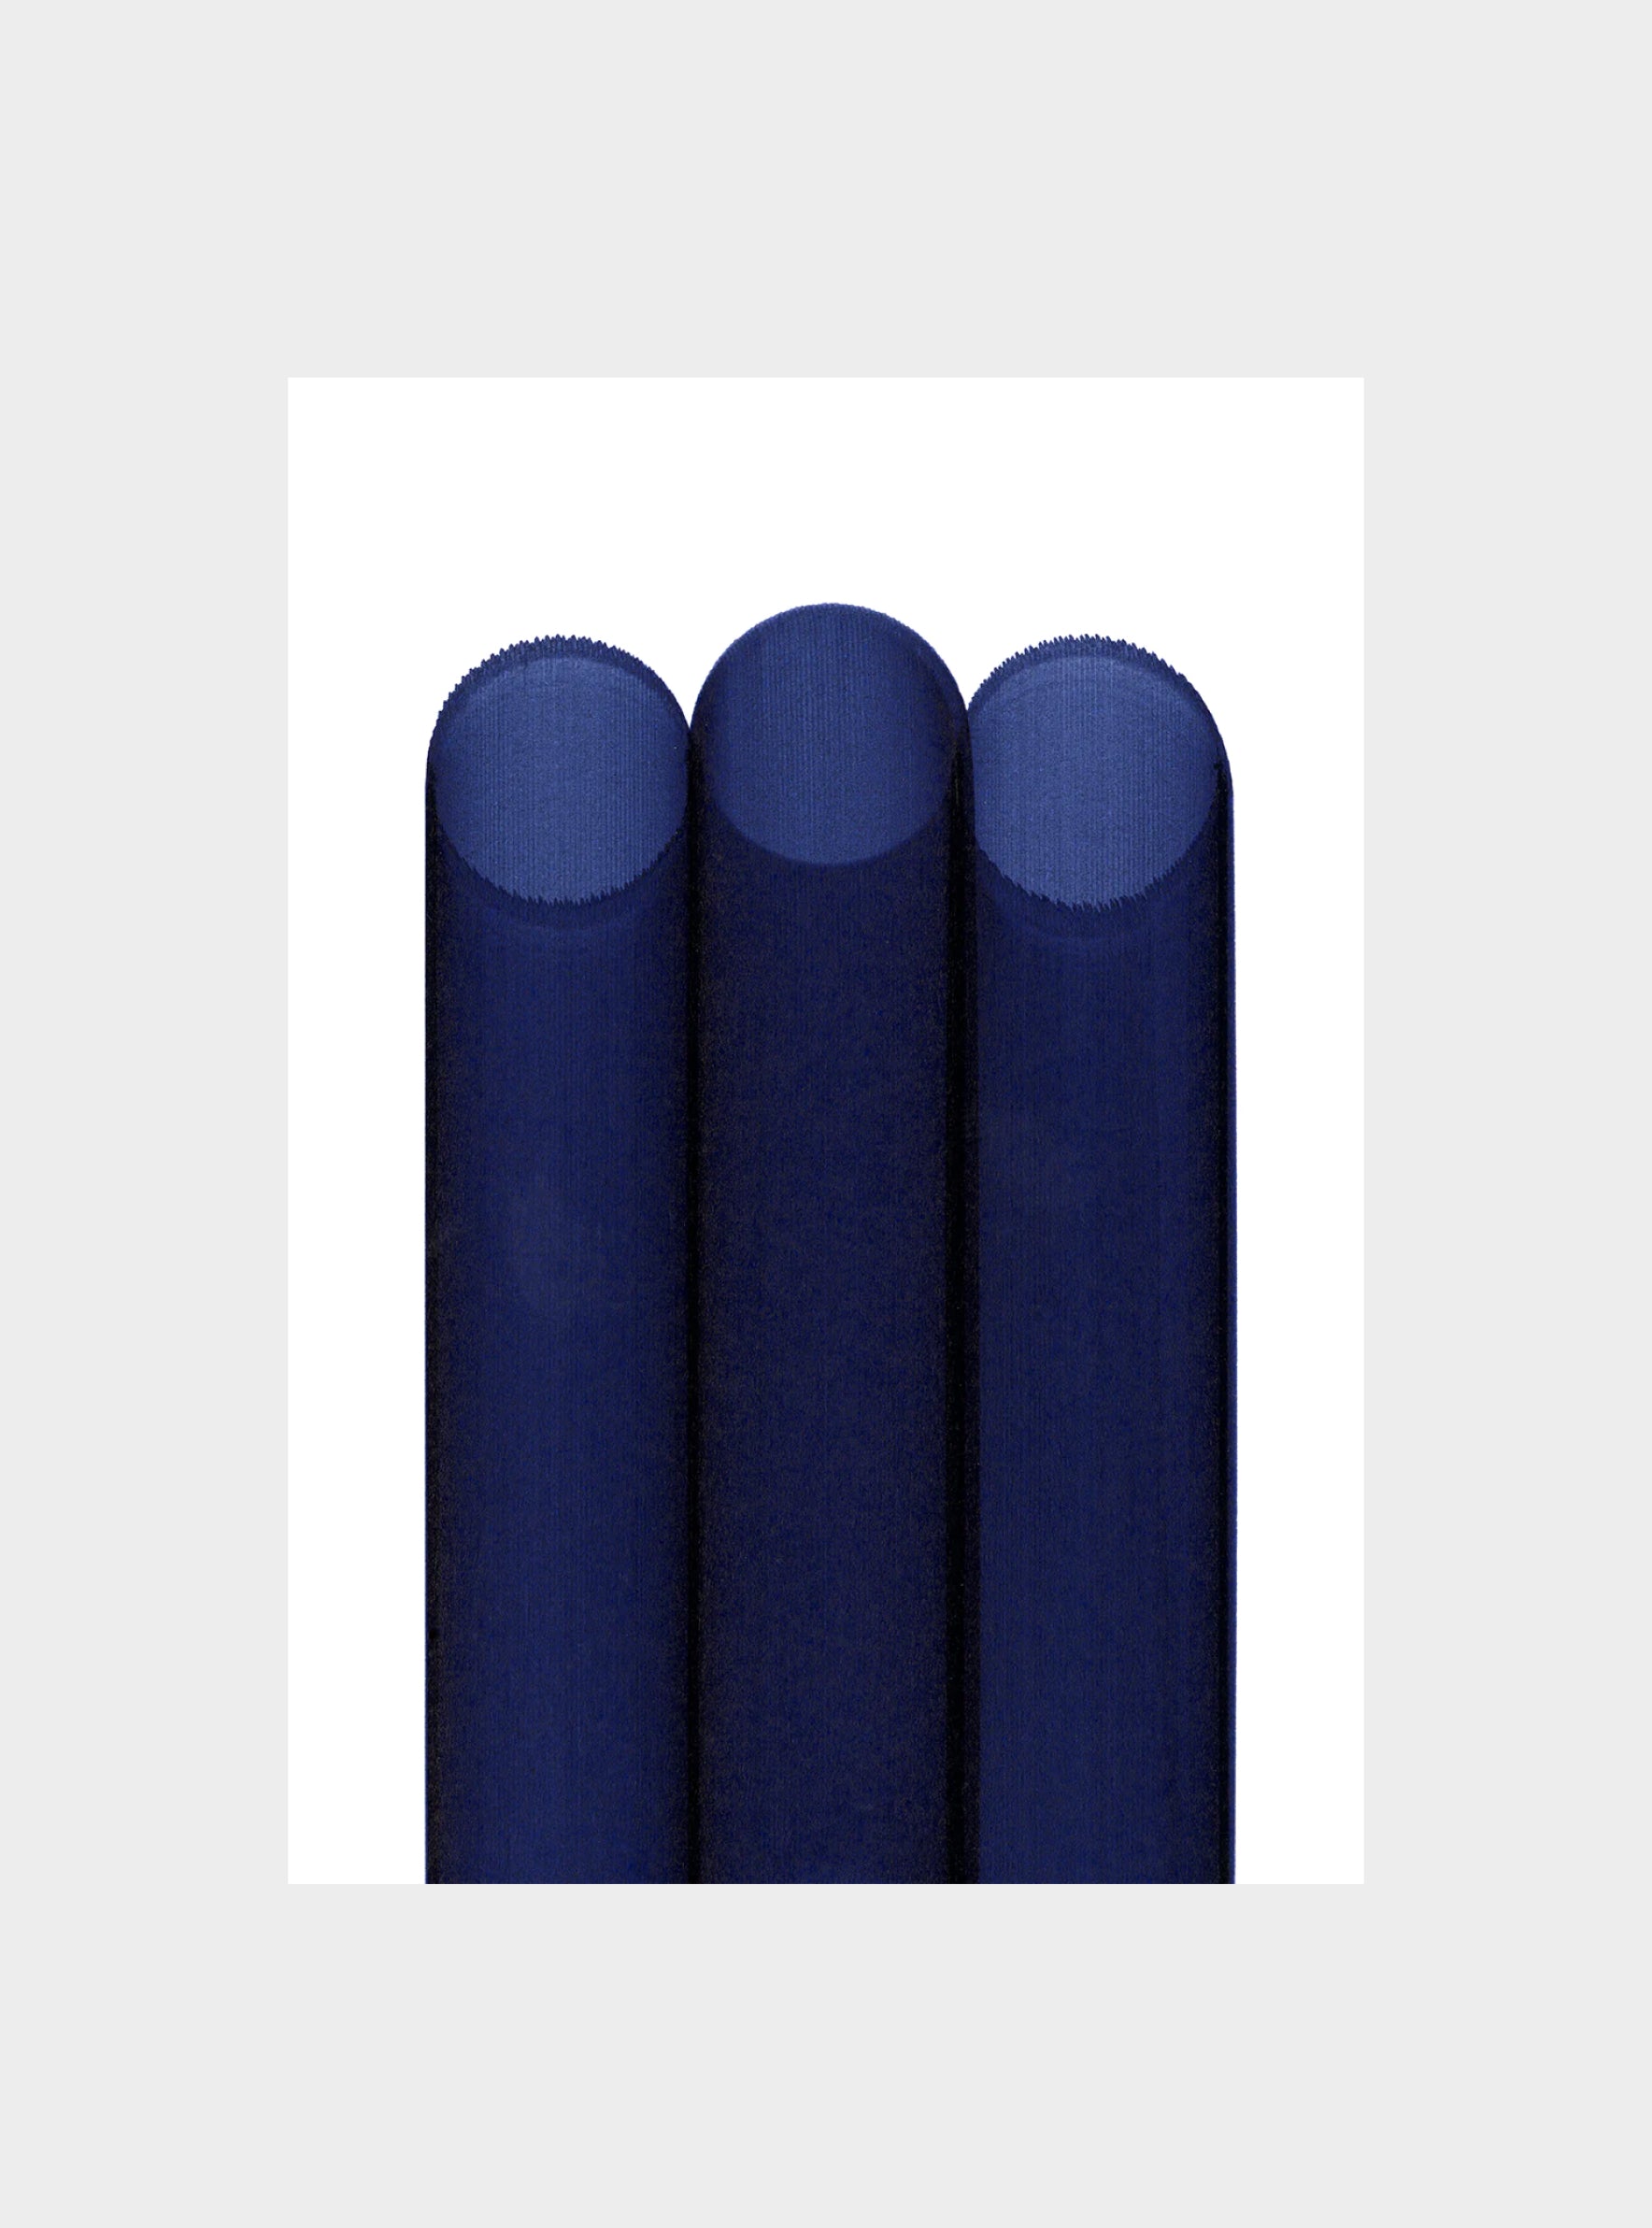 Blue Pipes By Arnaud Pfeffer